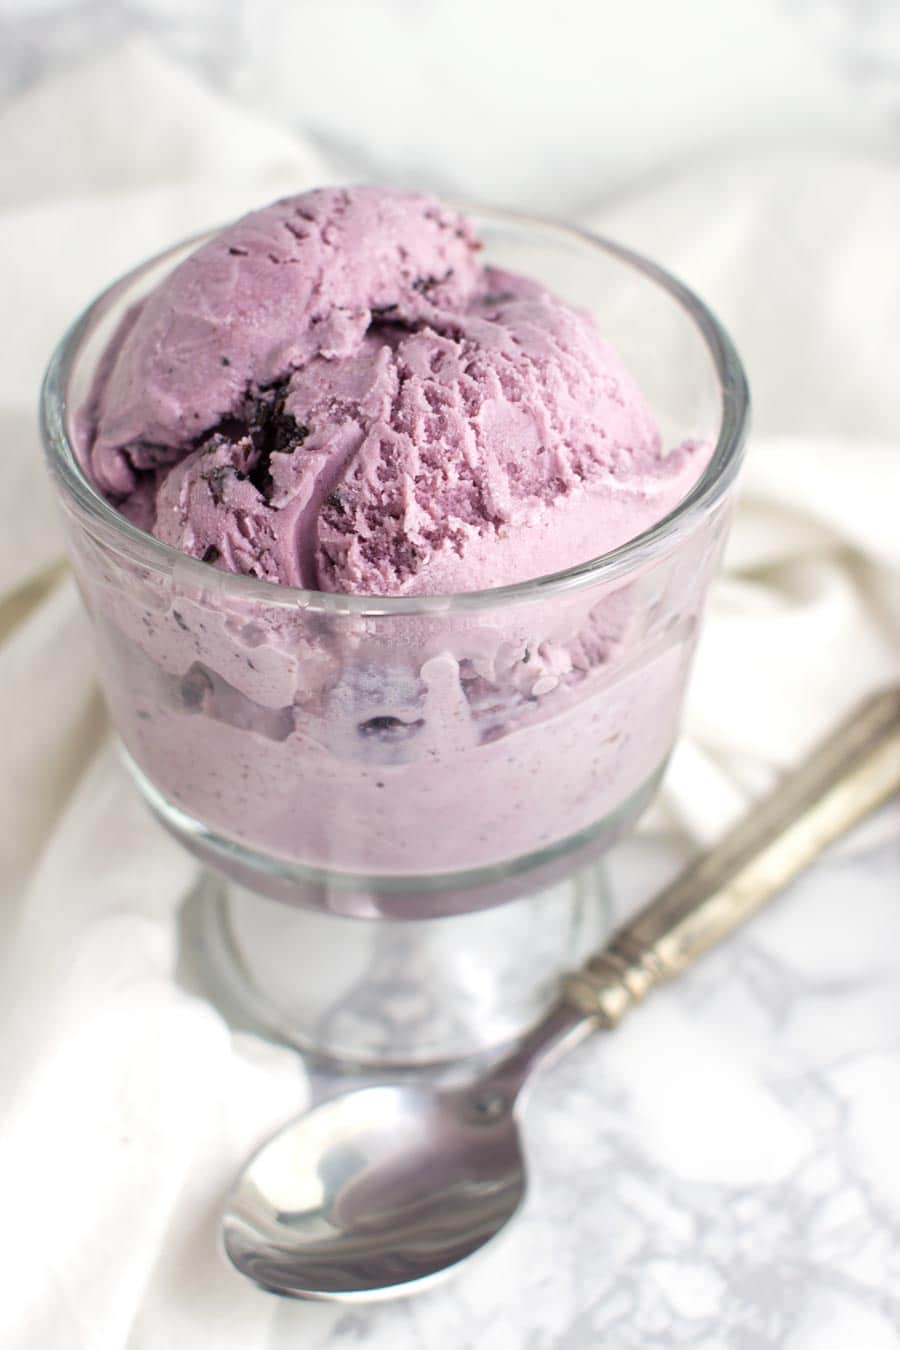 Black Plum Ice Cream recipe from acleanplate.com #paleo #aip #autoimmuneprotocol